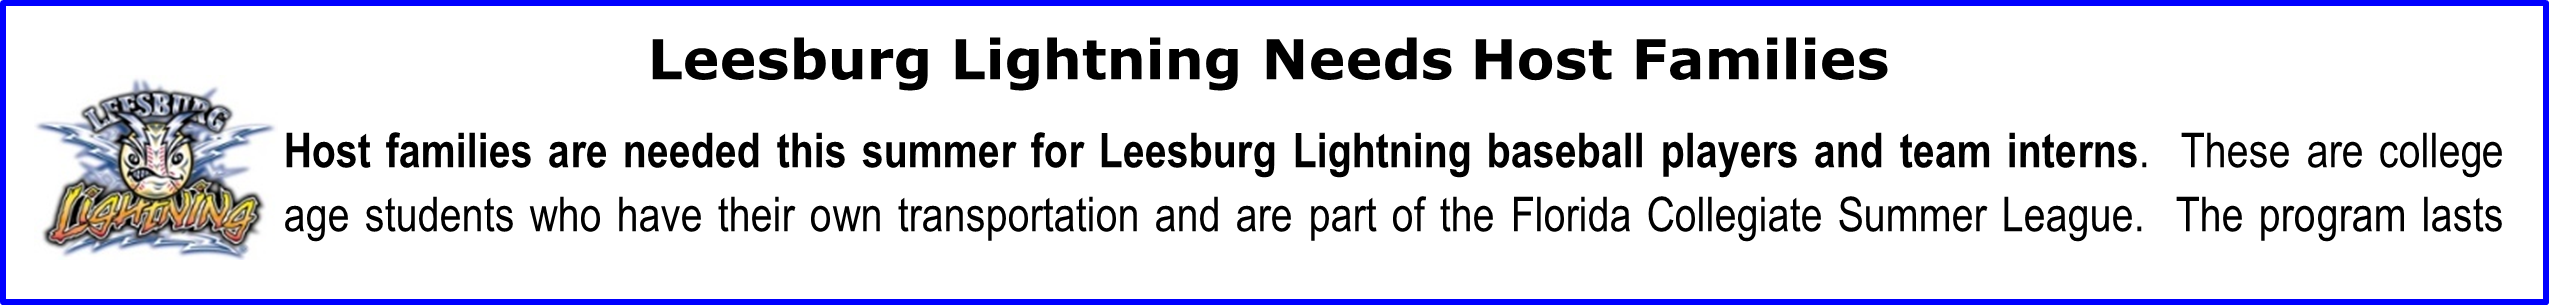 Leesburg Lightning Needs Hose Families info